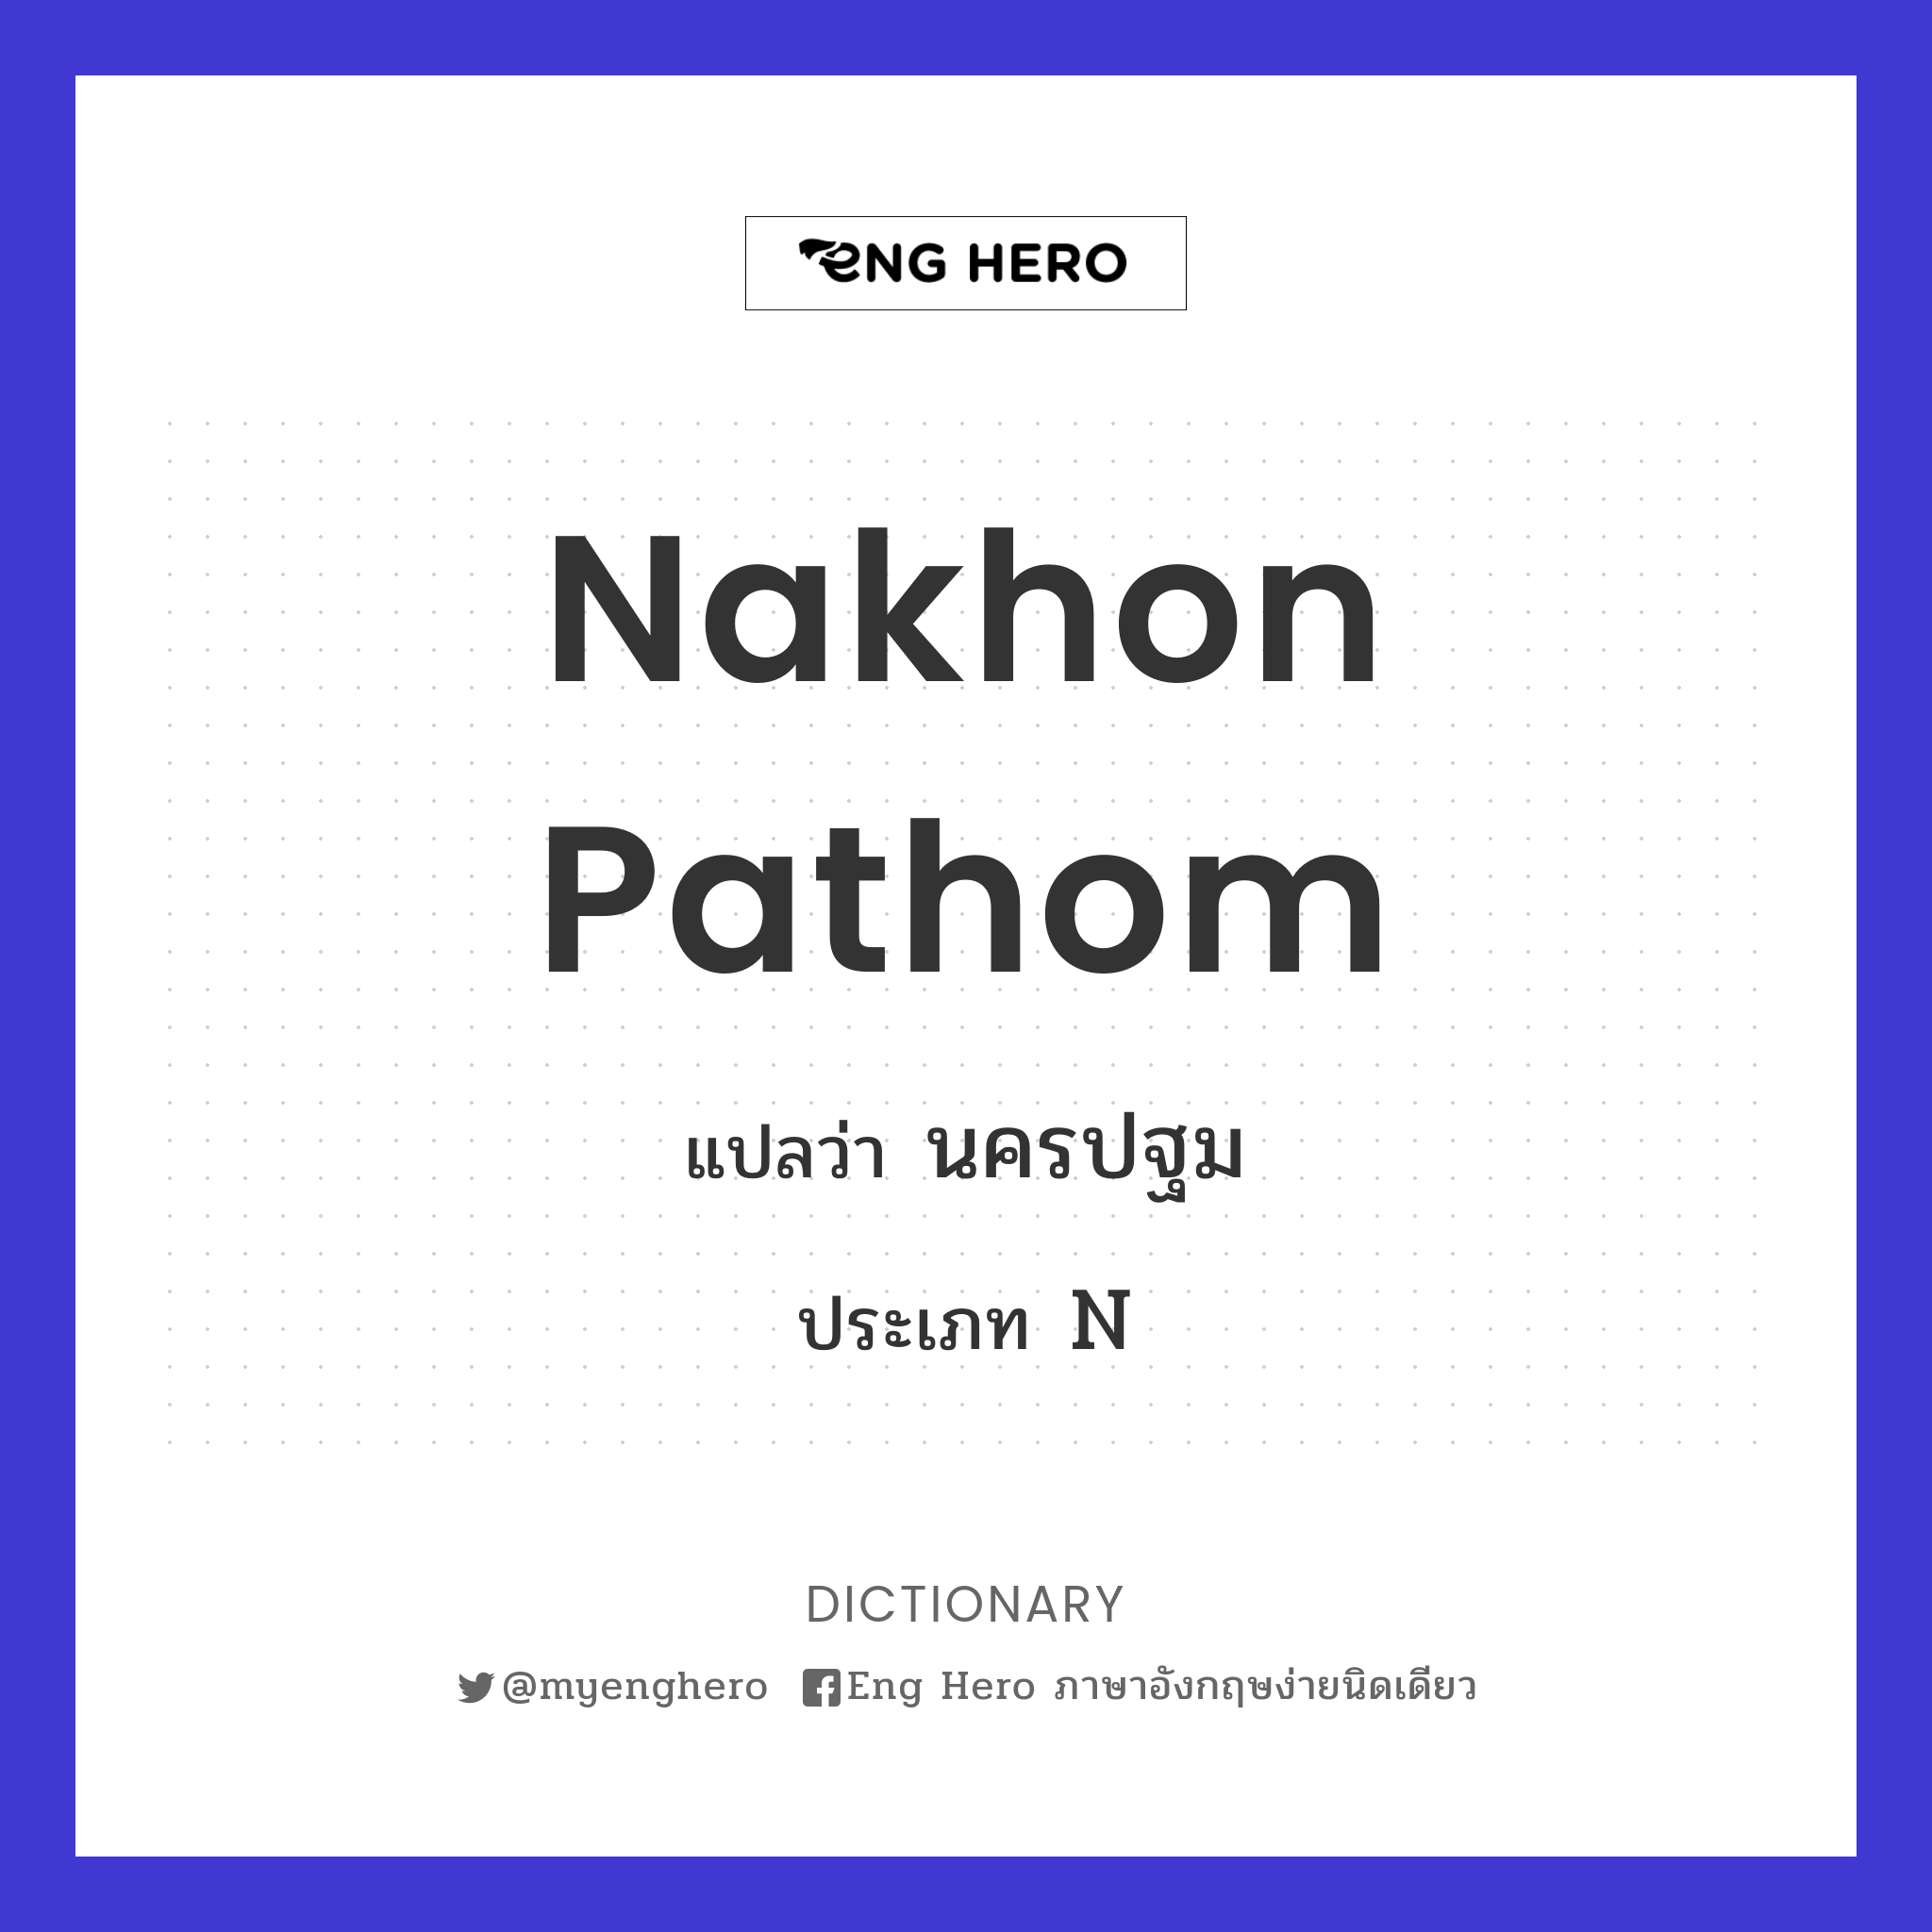 Nakhon Pathom